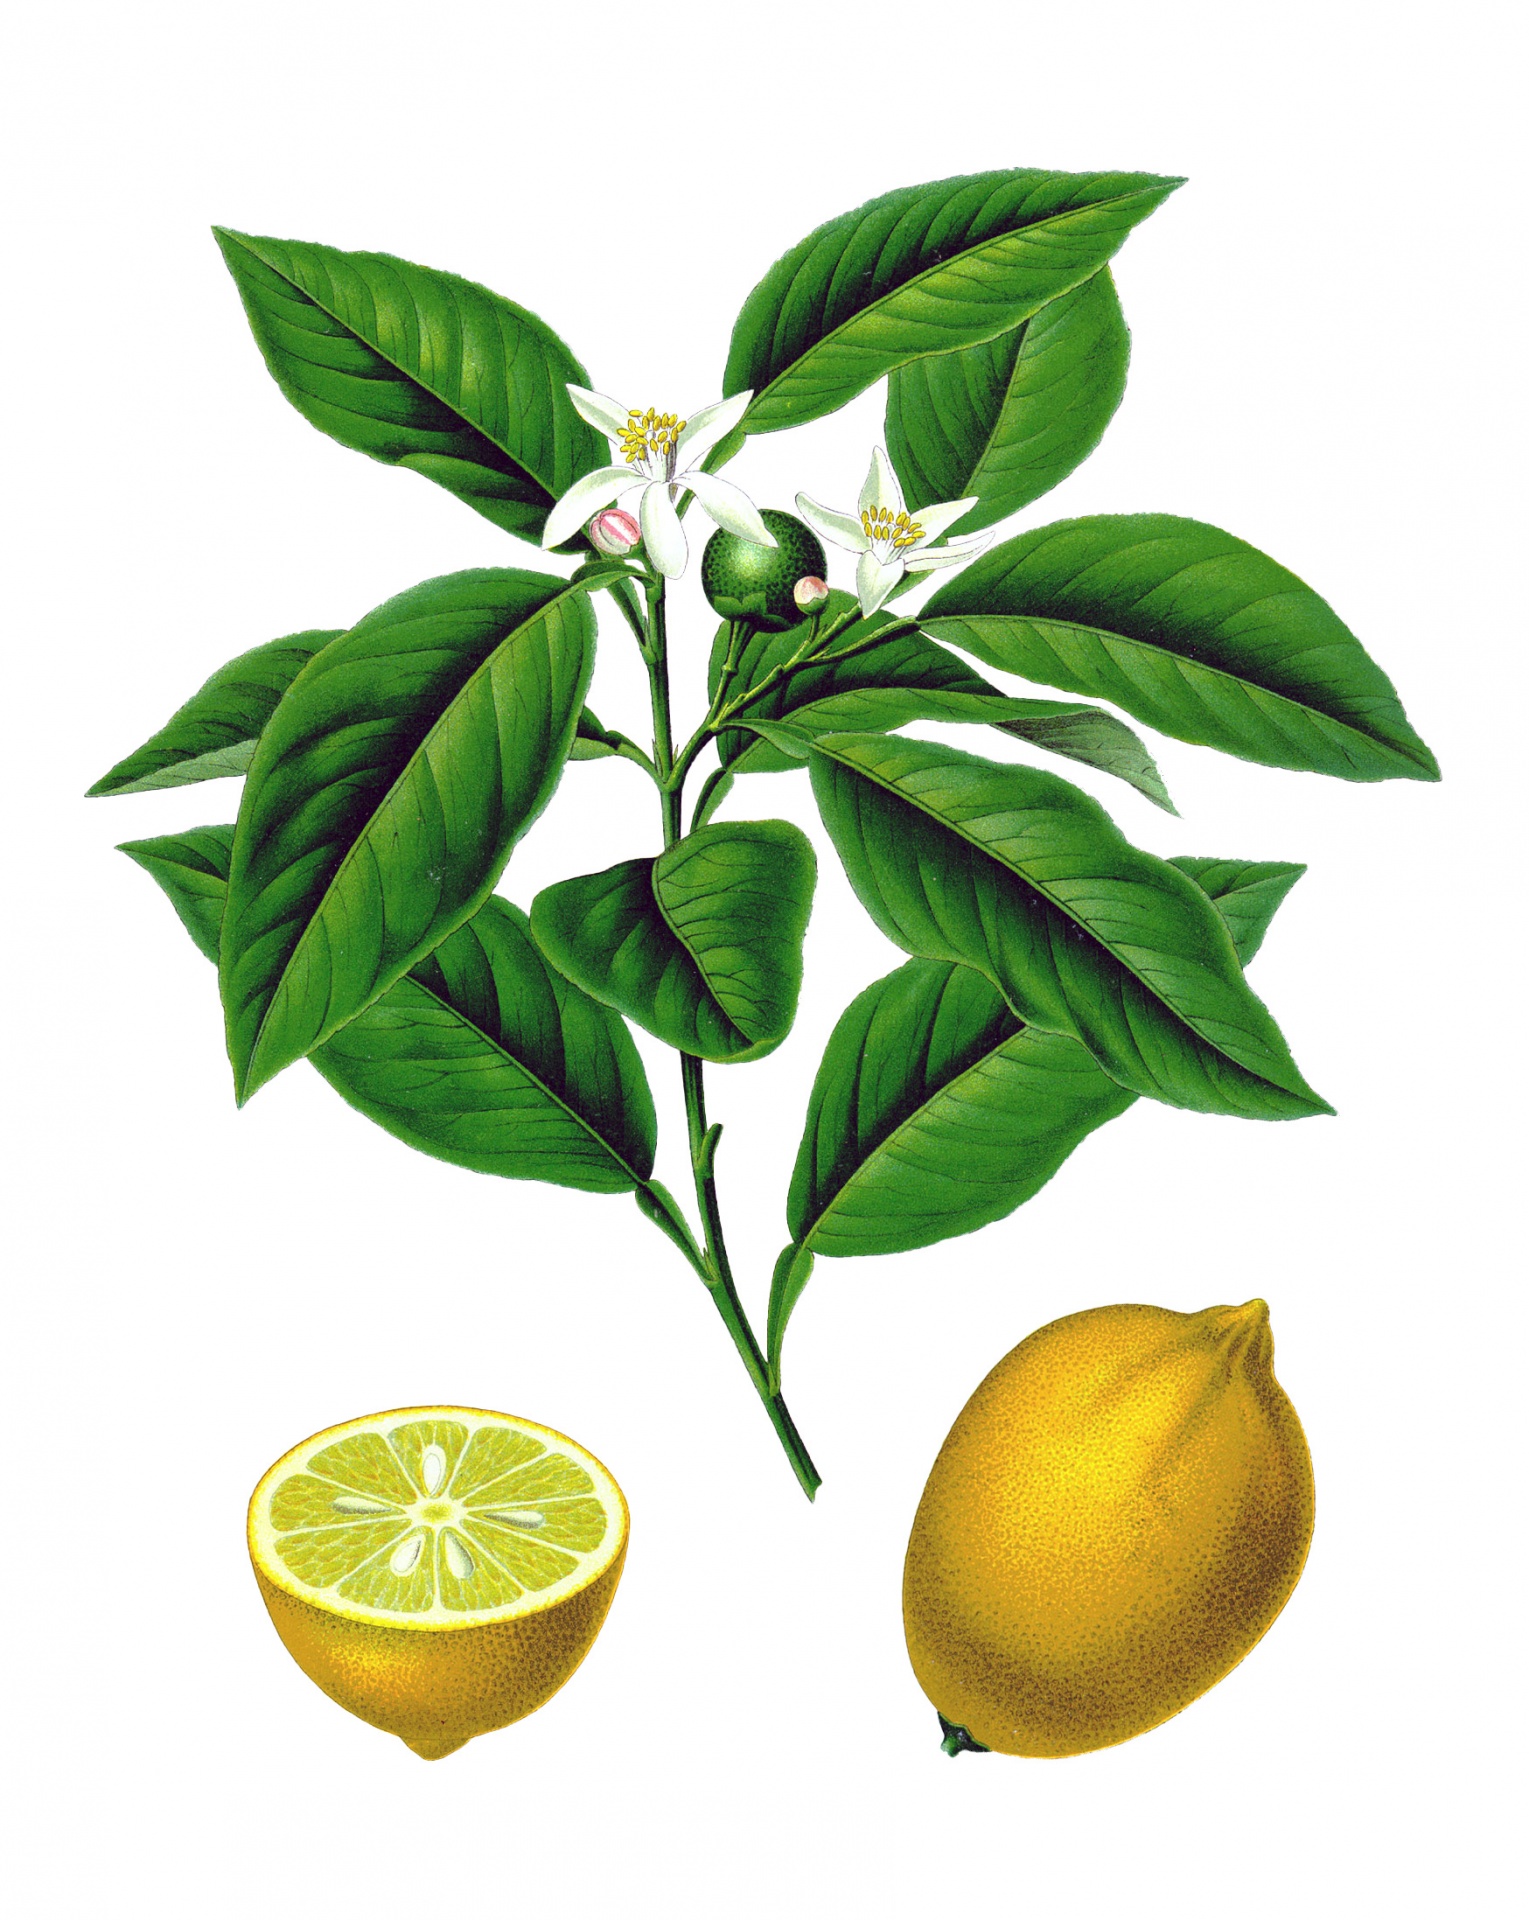 Vintage botanical art illustration of lemons, fruit of the lemon tree clipart on white background with leaves and blossom flower